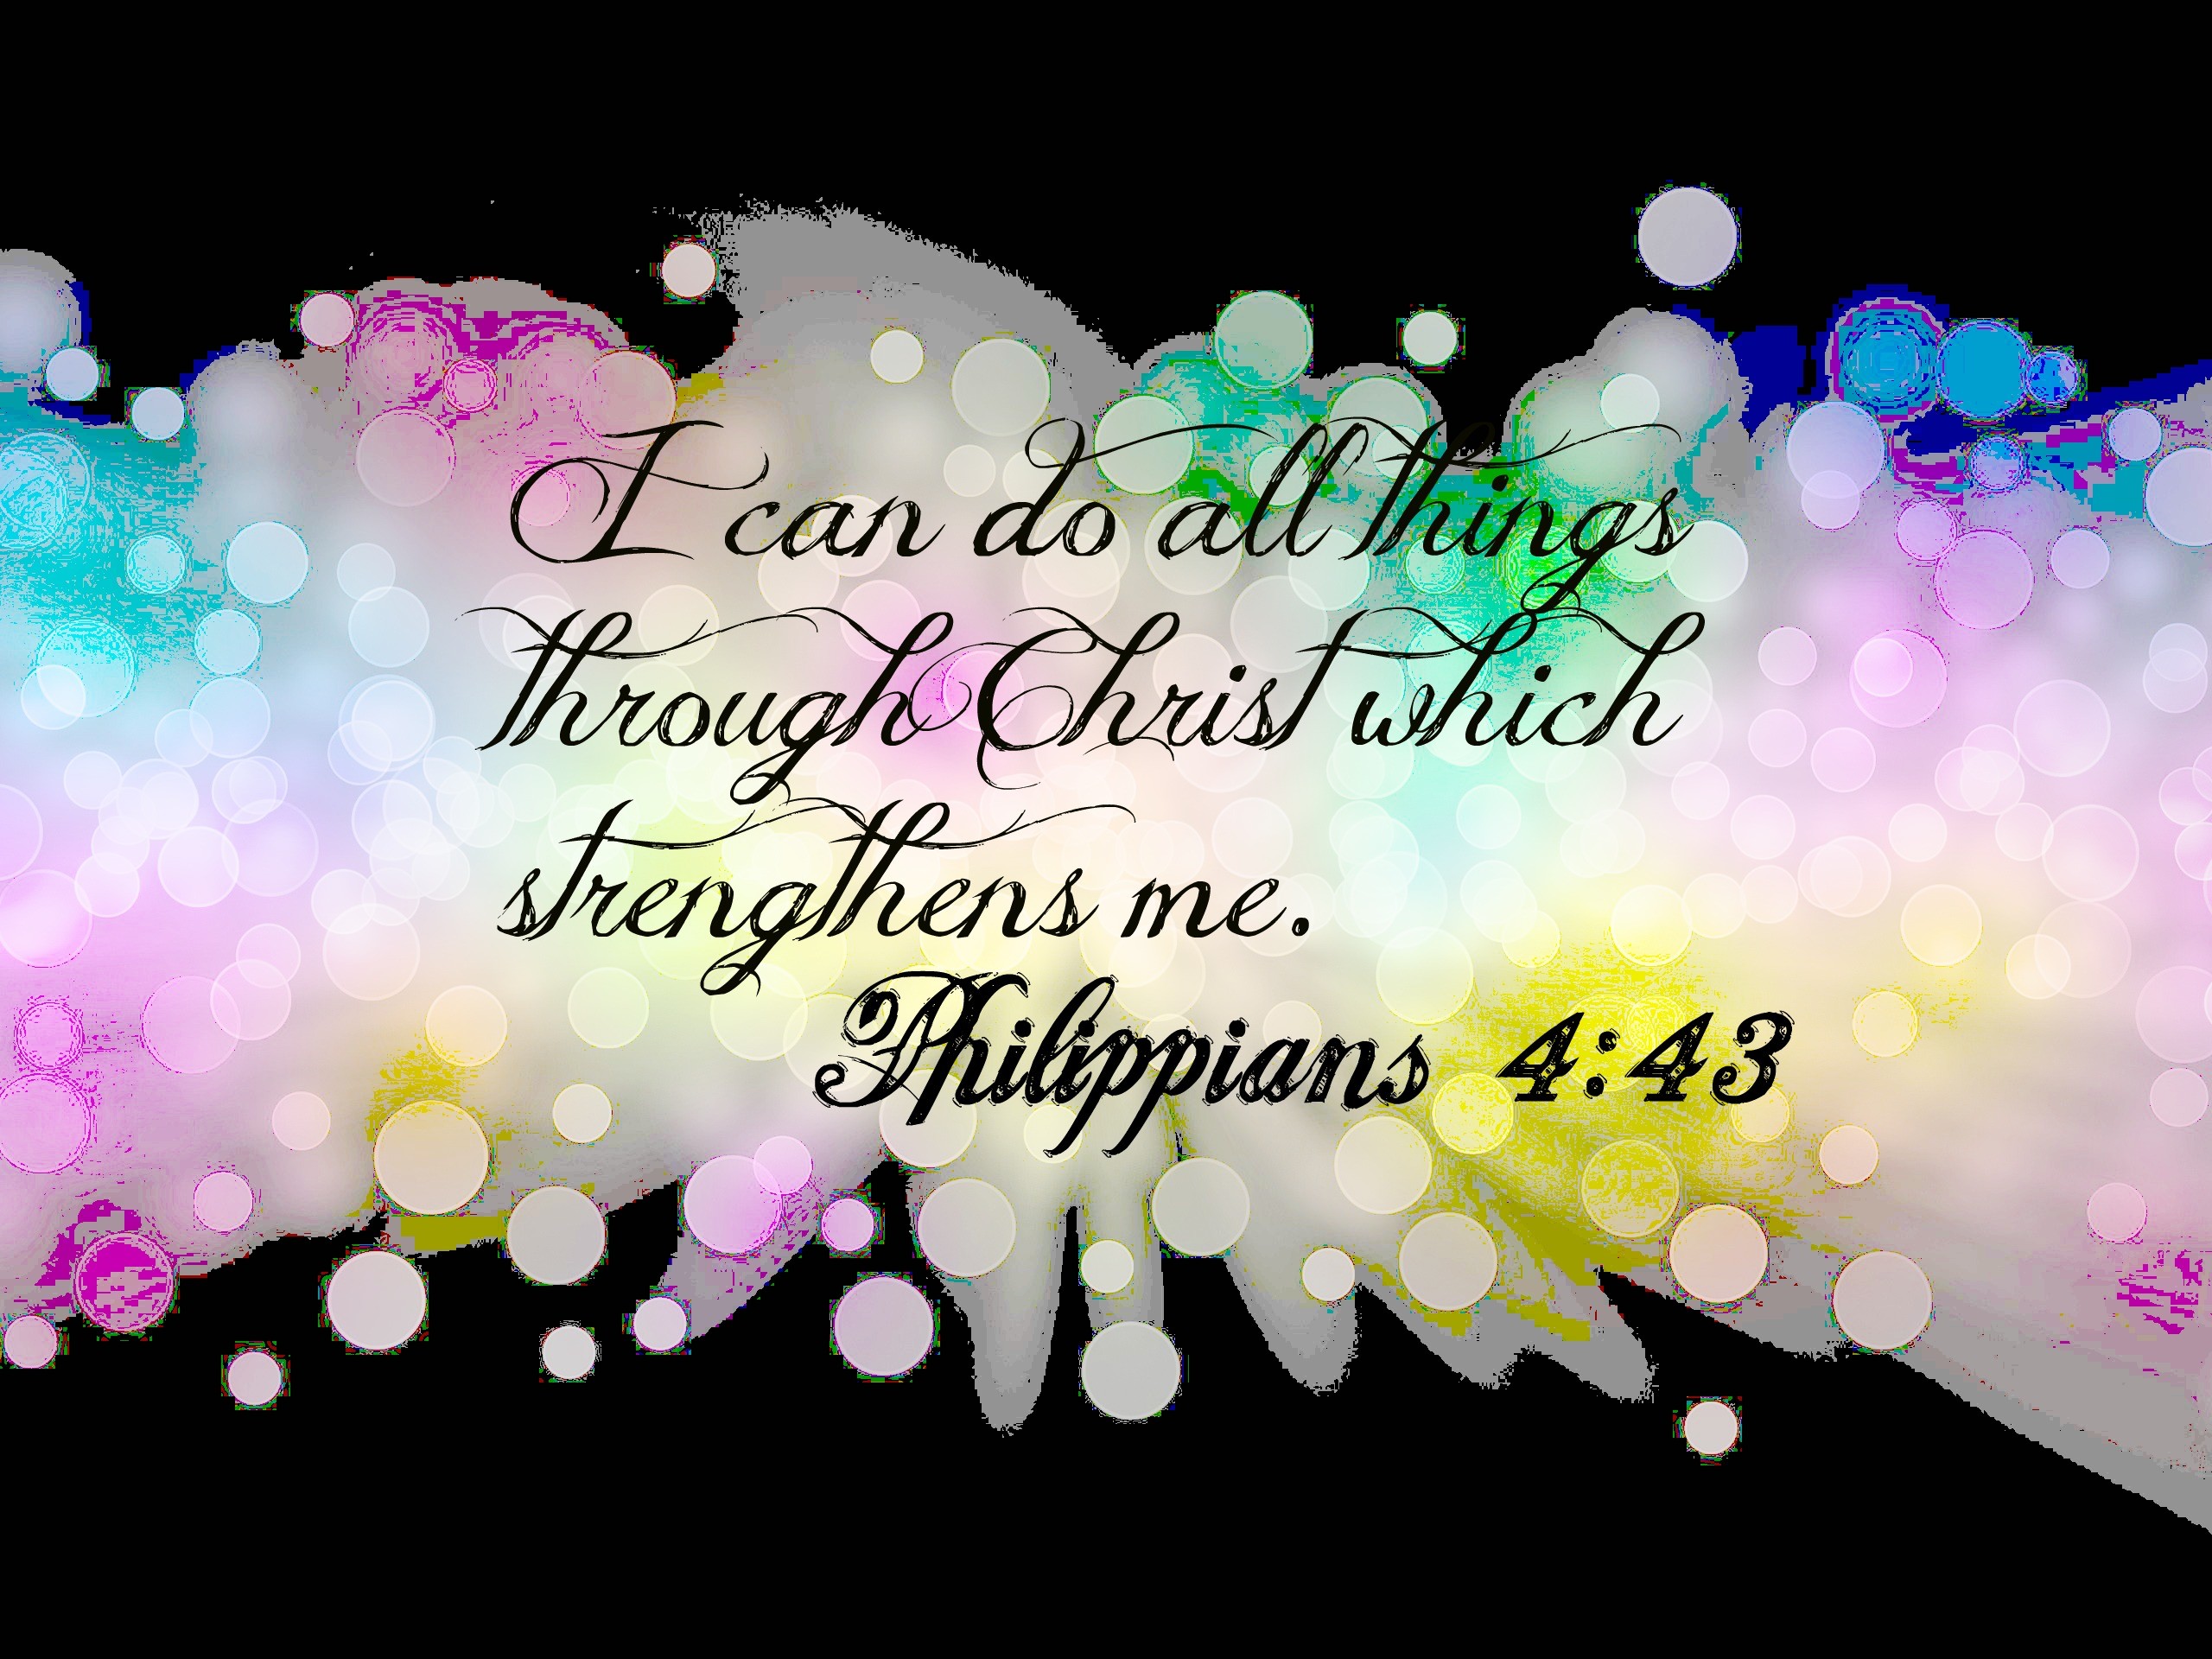 2560x1920 Philippians 4:43